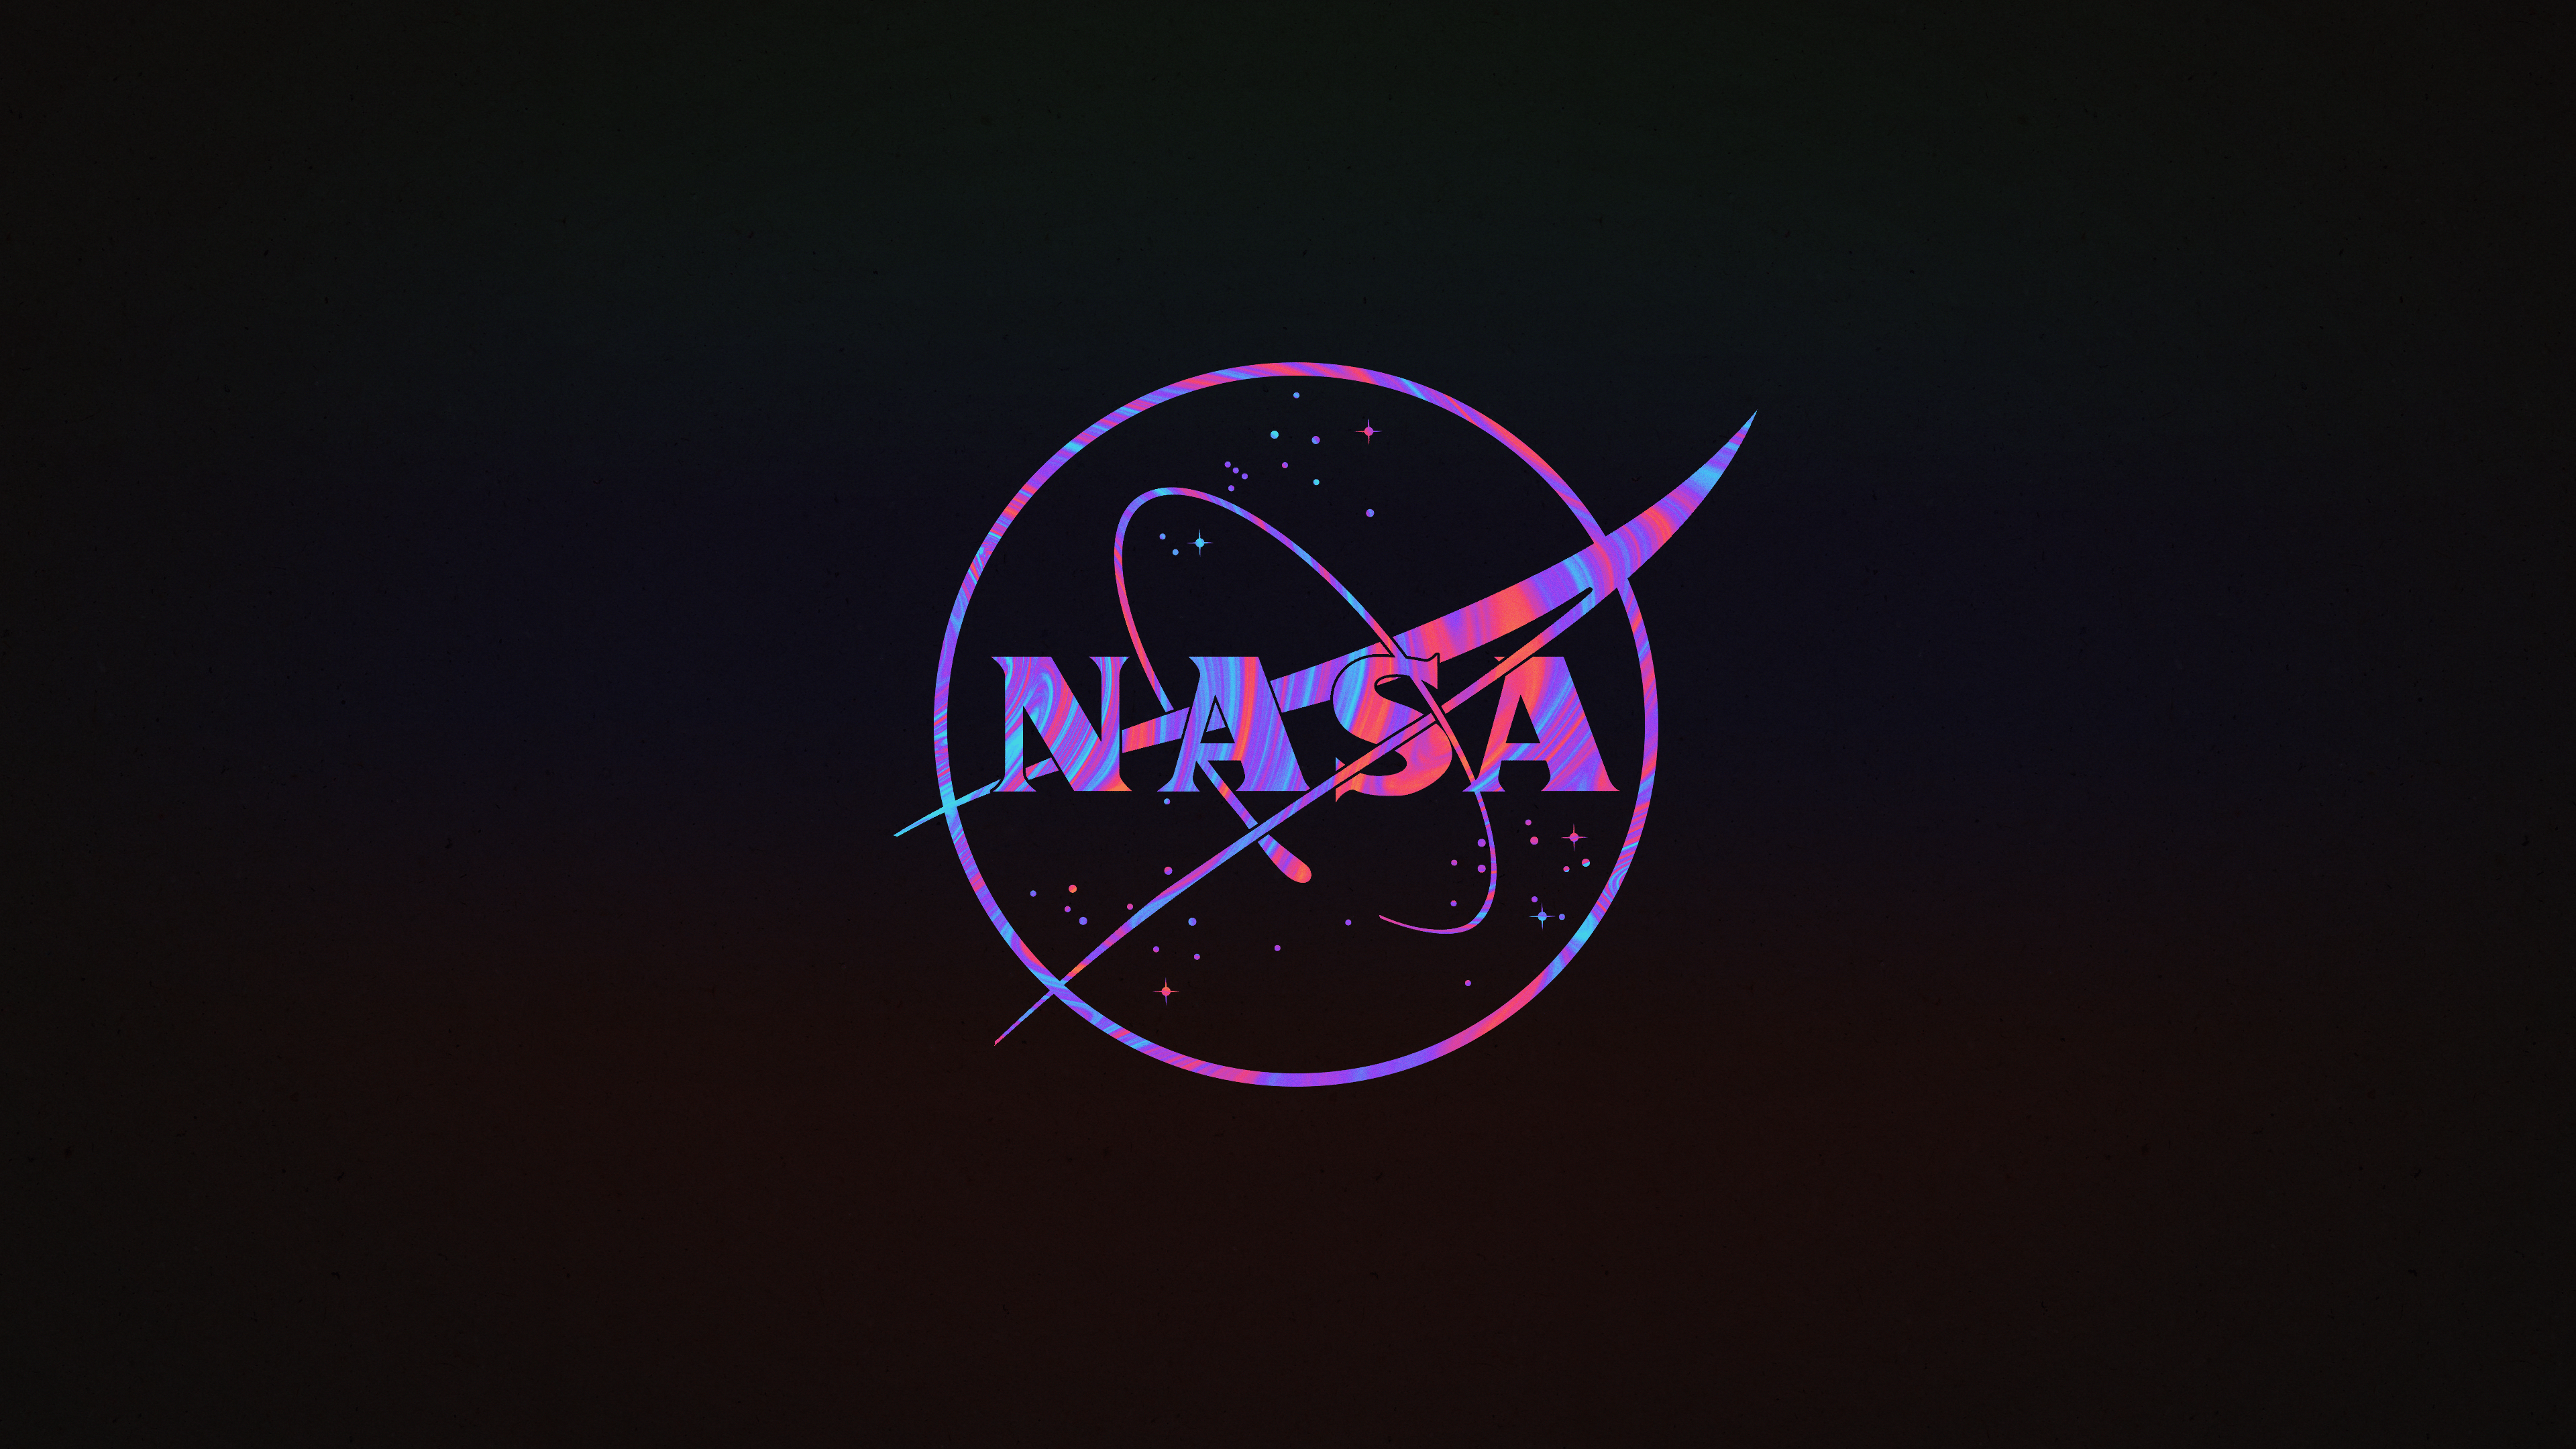 NEON NASA WallPaper [3840 x 2160]